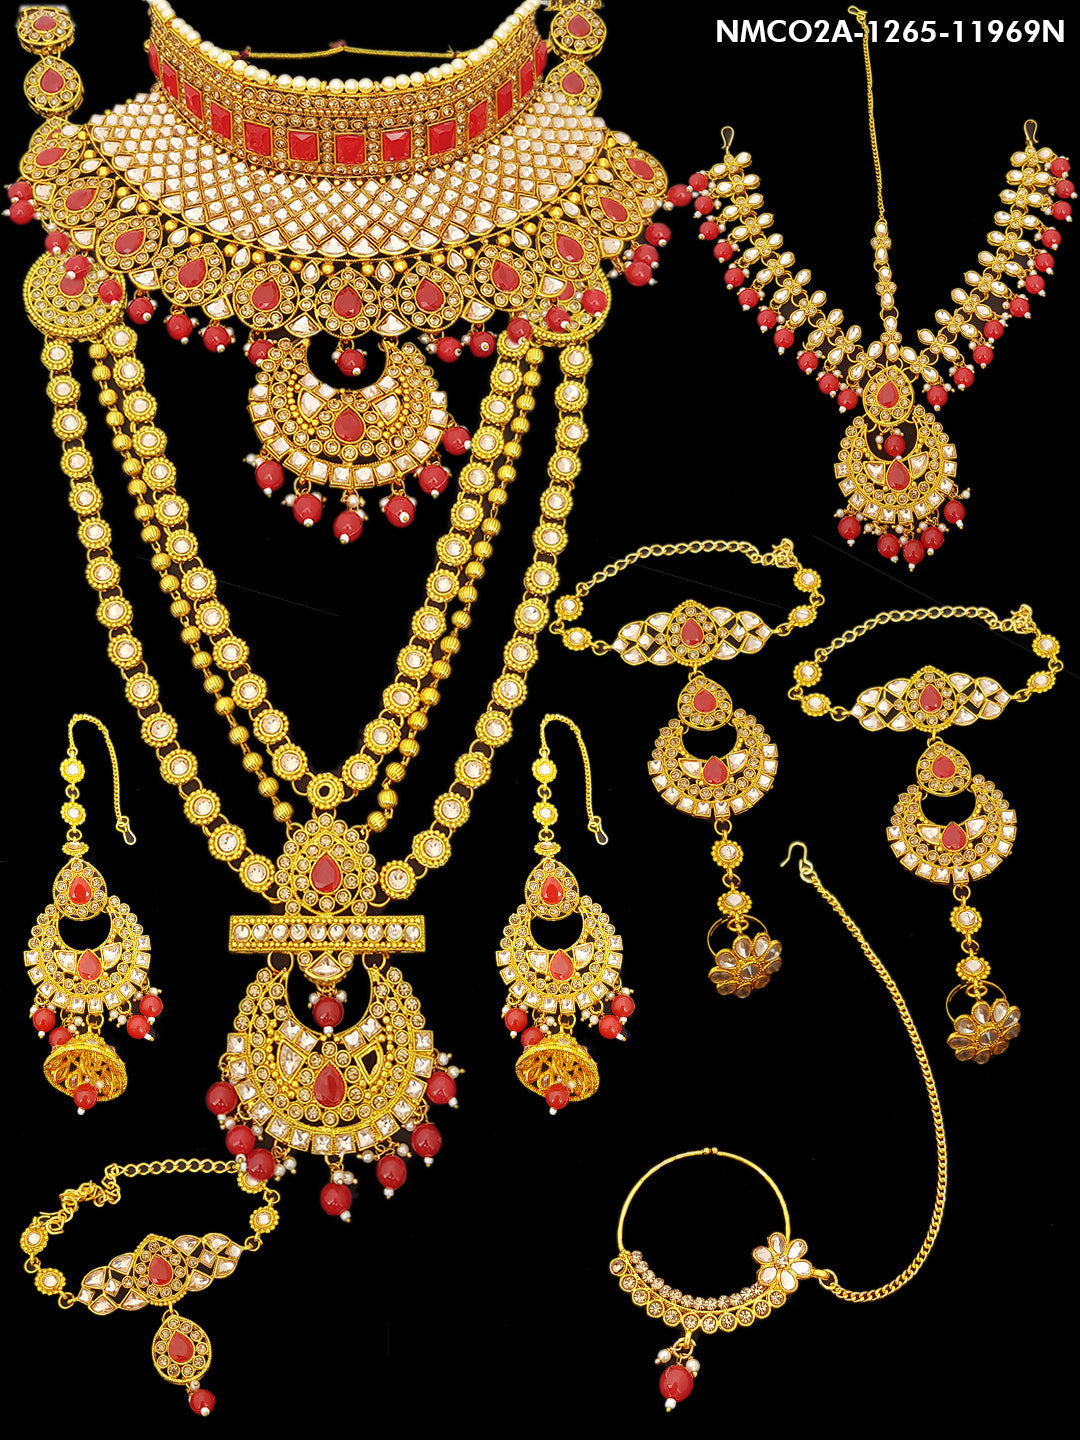 Fancy Dulhan set Gold Polish Bridal jewelry Set combo Meenkari and kundan 11968N